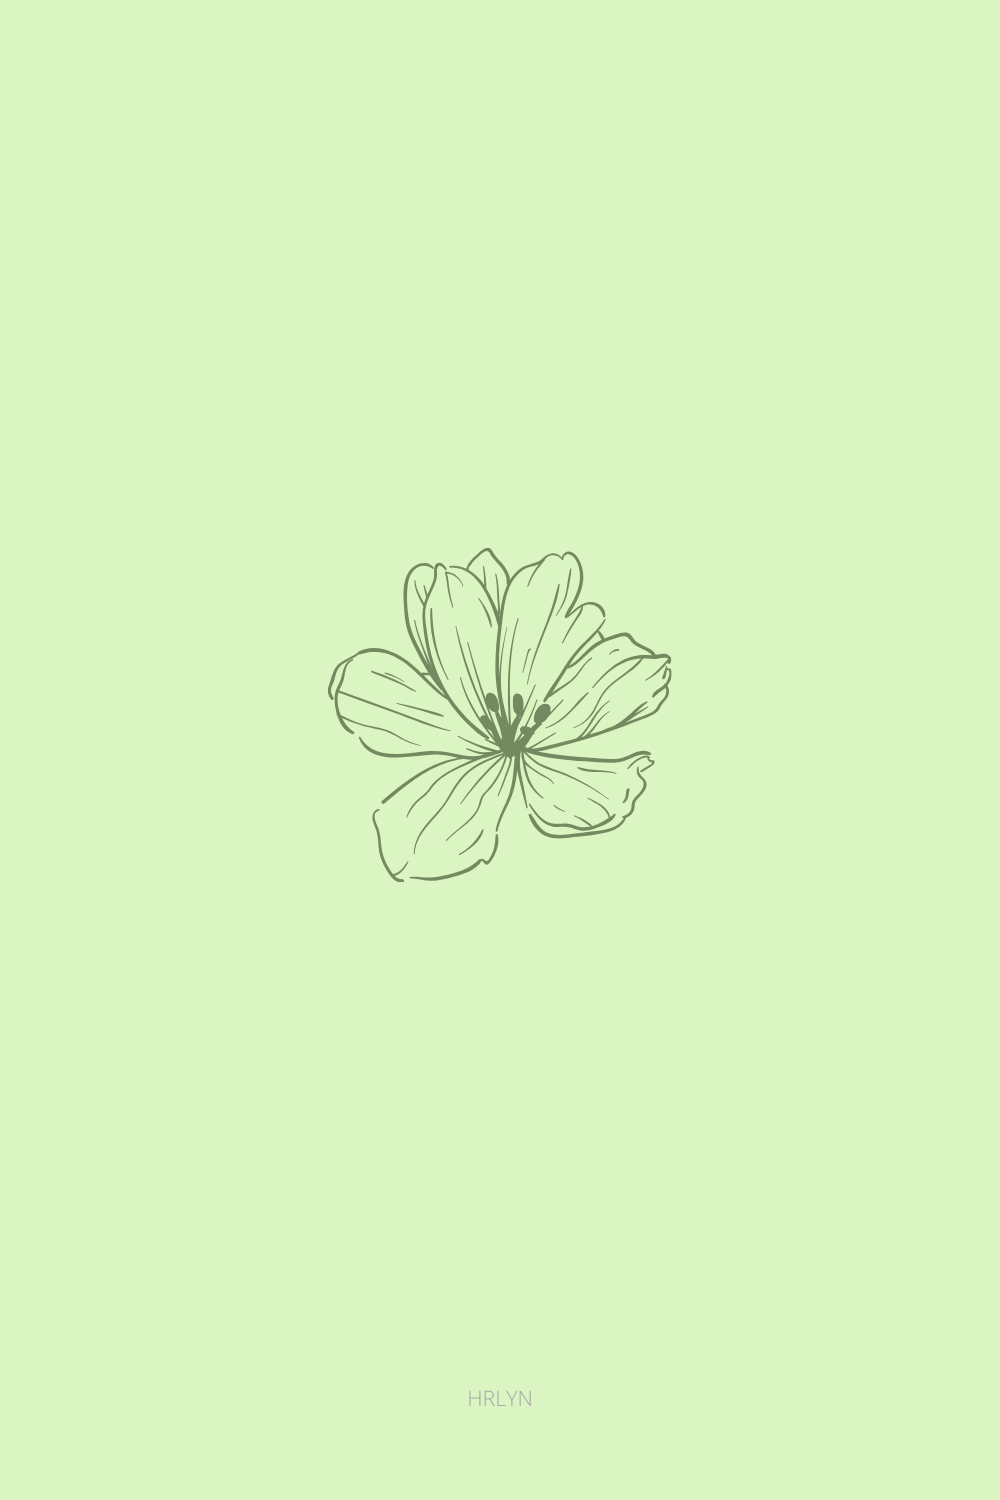 A flower on green background - Pastel minimalist